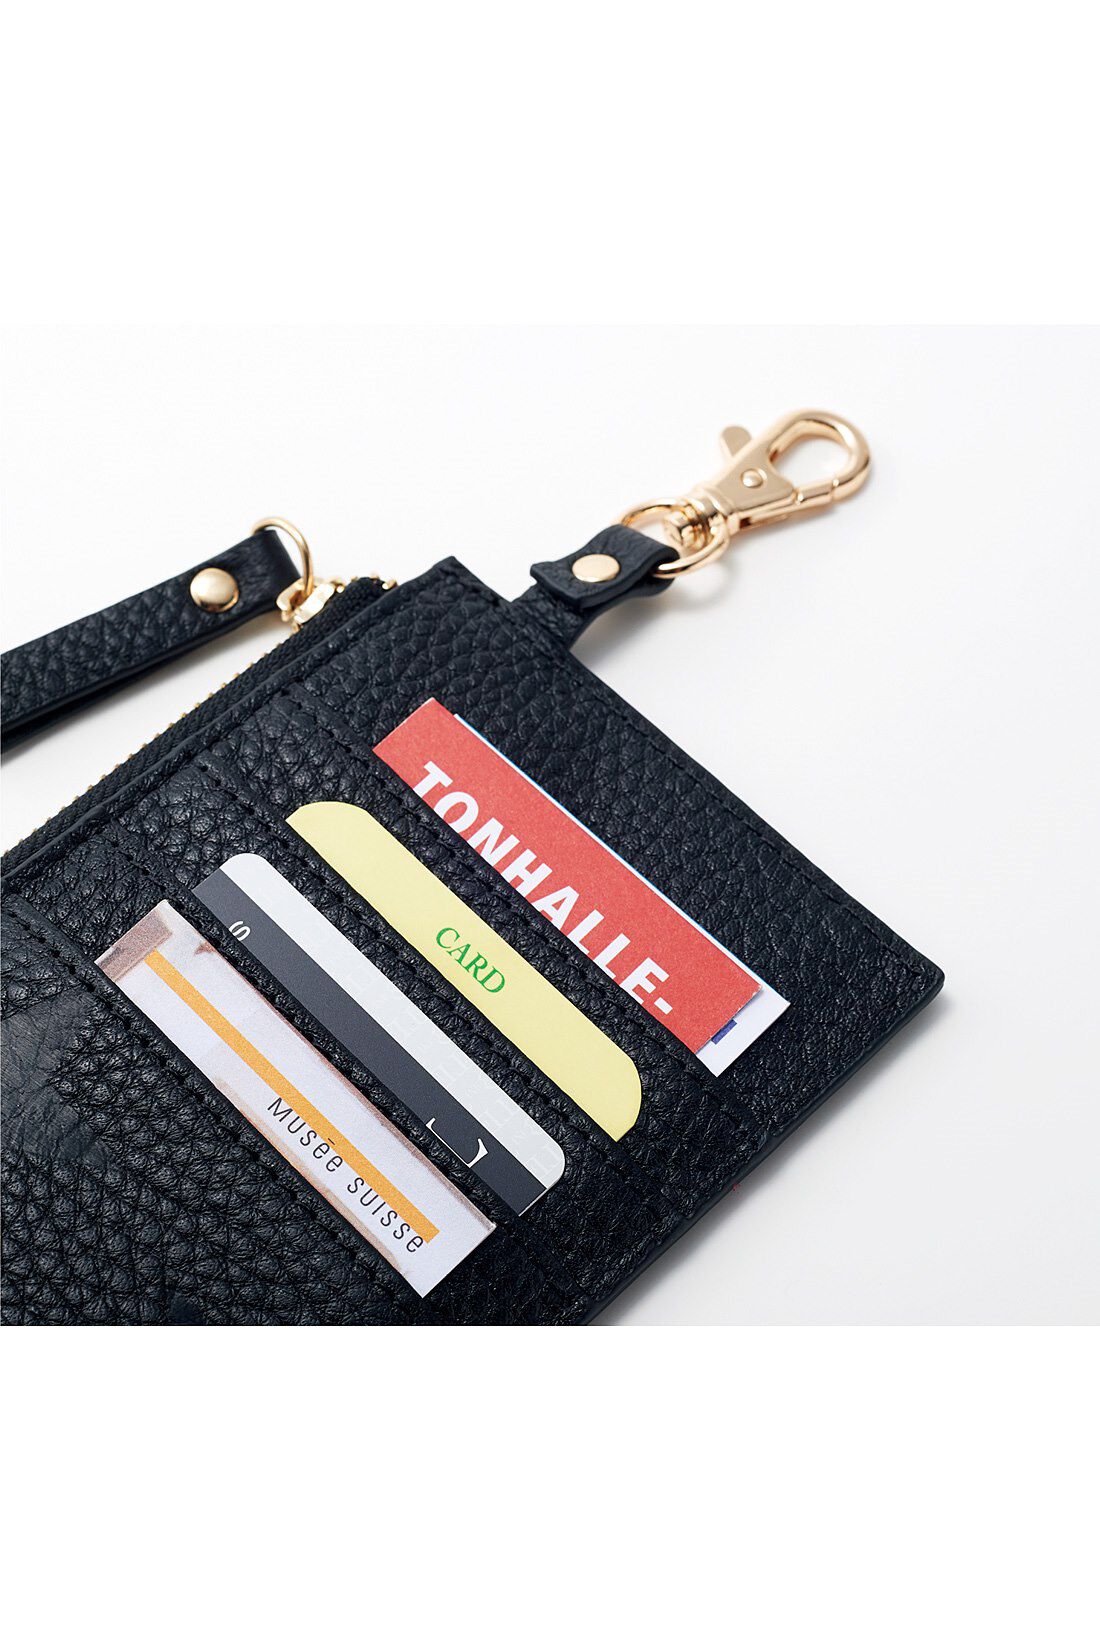 IEDIT|IEDIT[イディット]　本革が大人にうれしい スターエンボス加工のスリムミニ財布〈ブラック〉　|使用頻度の高いカードや定期は外側に収納。